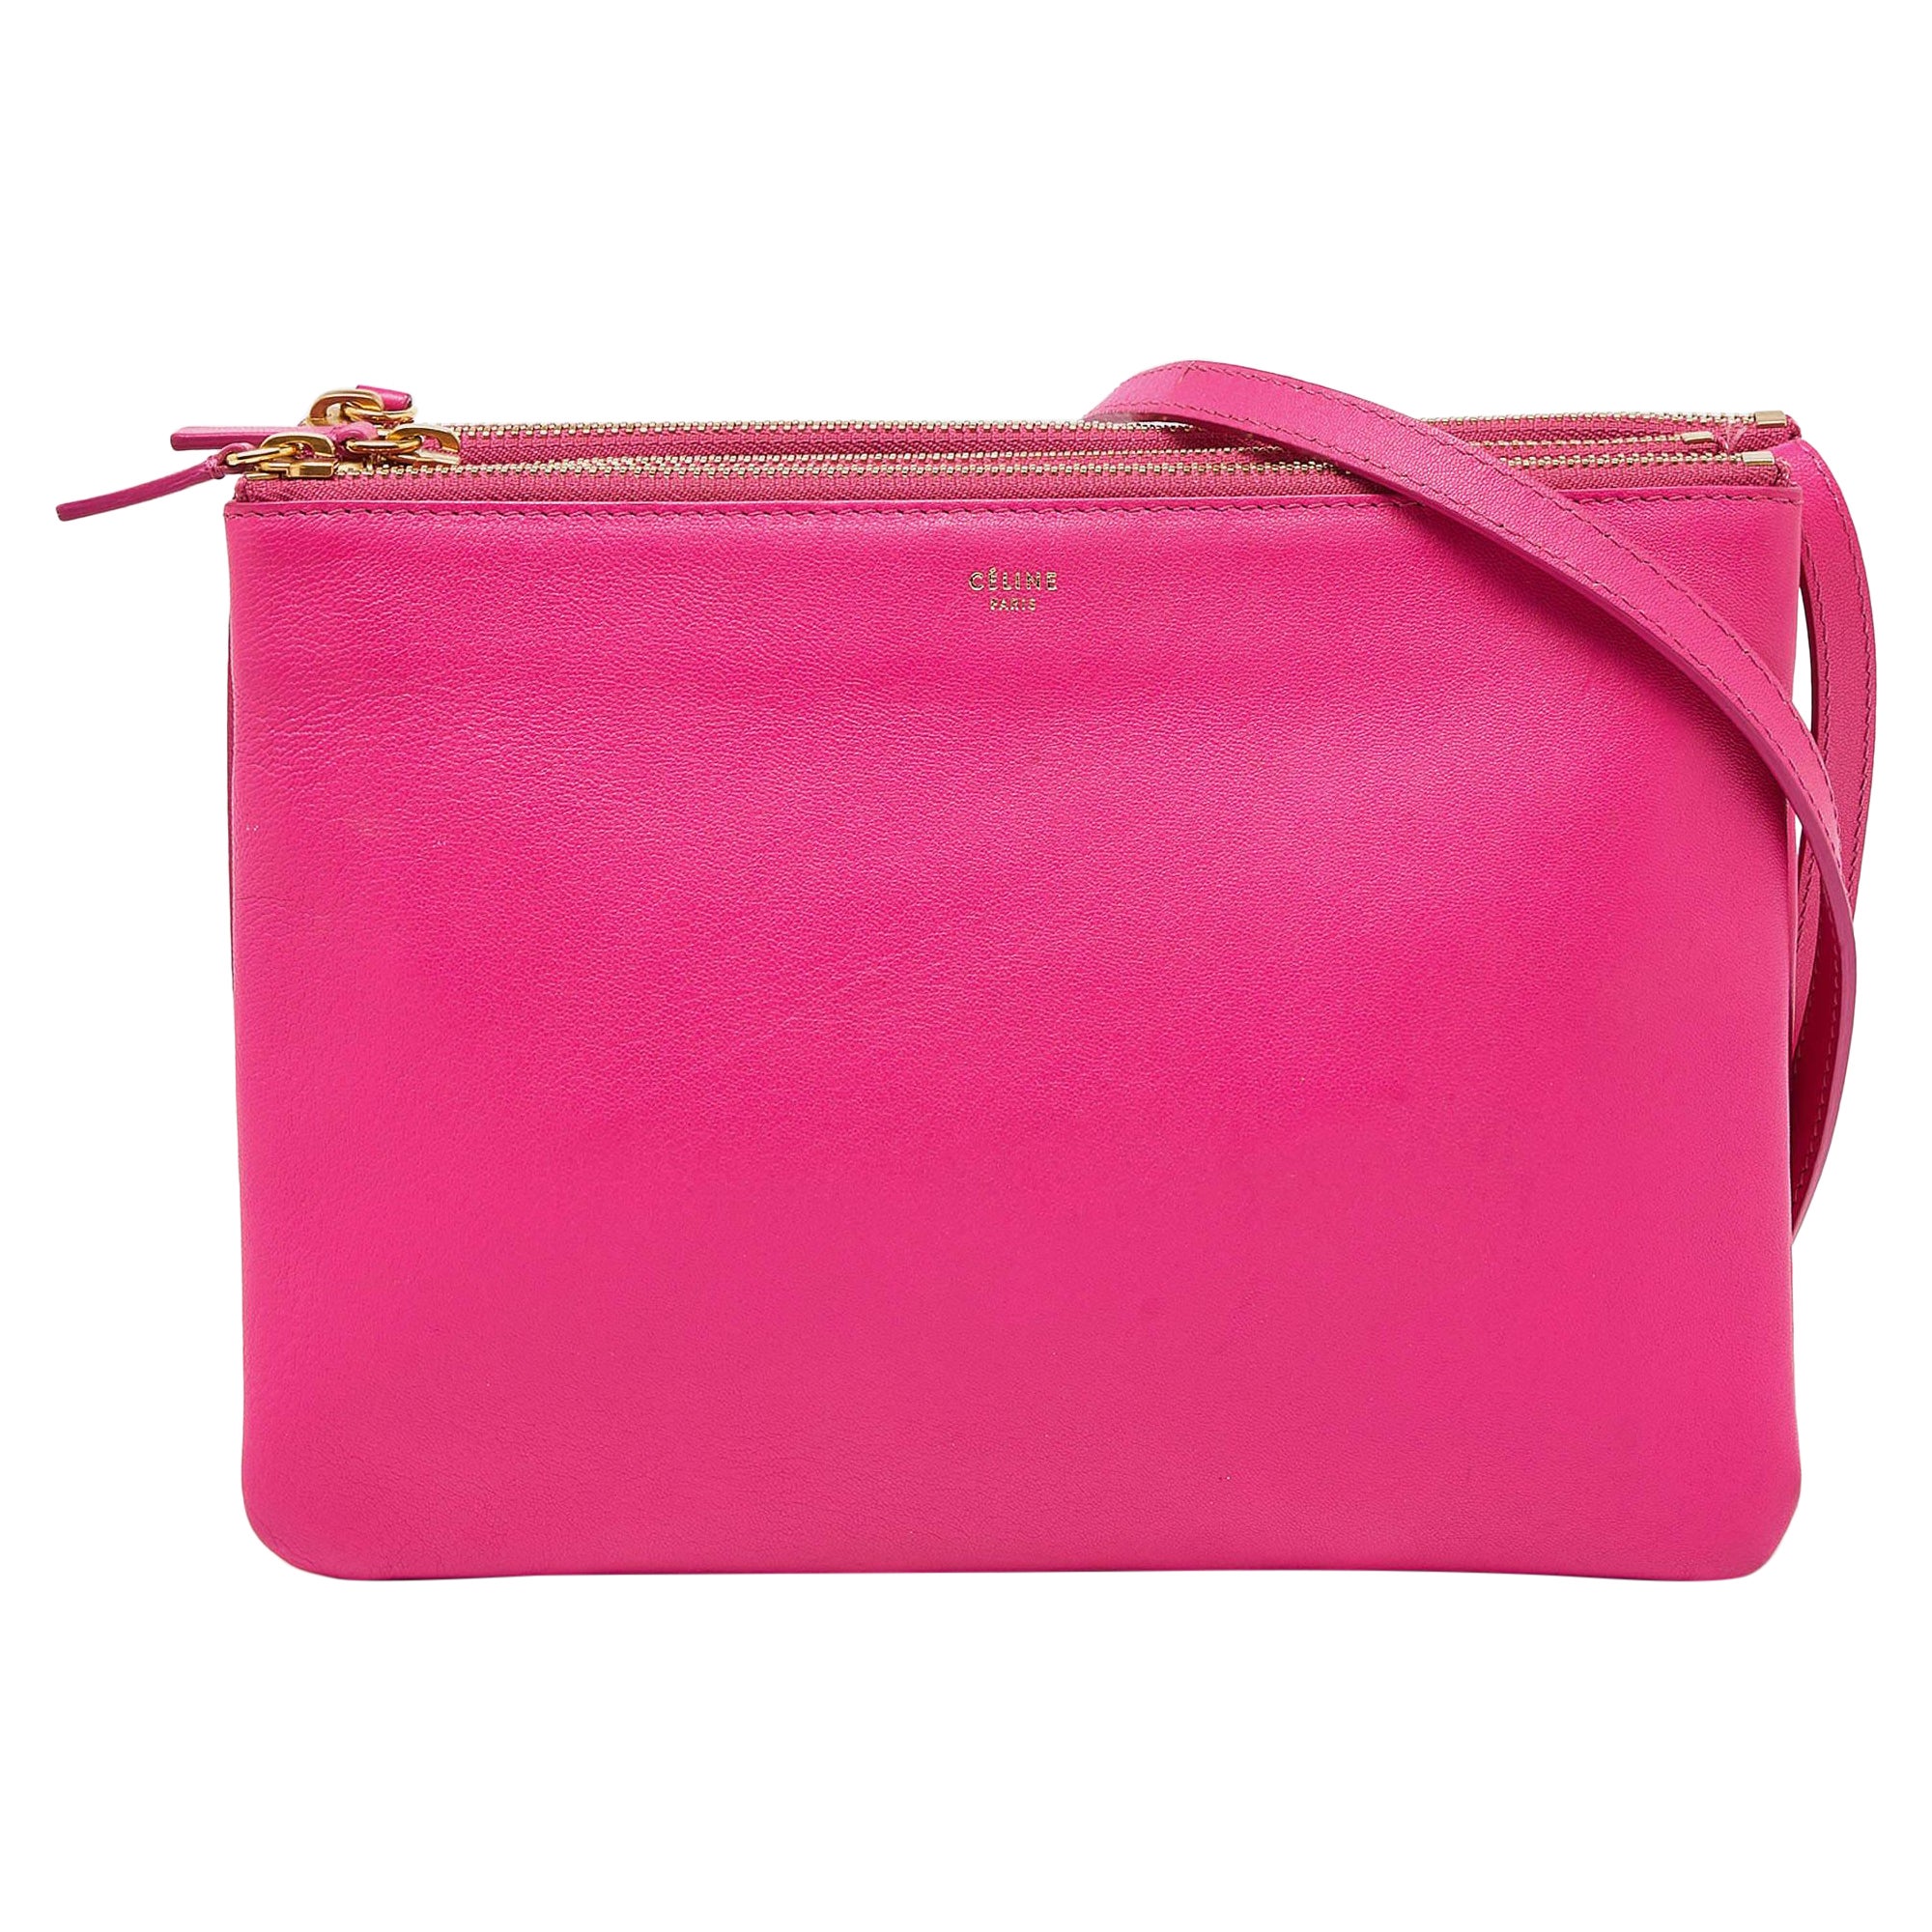 Celine Pink Leather Large Trio Zip Crossbody Bag For Sale